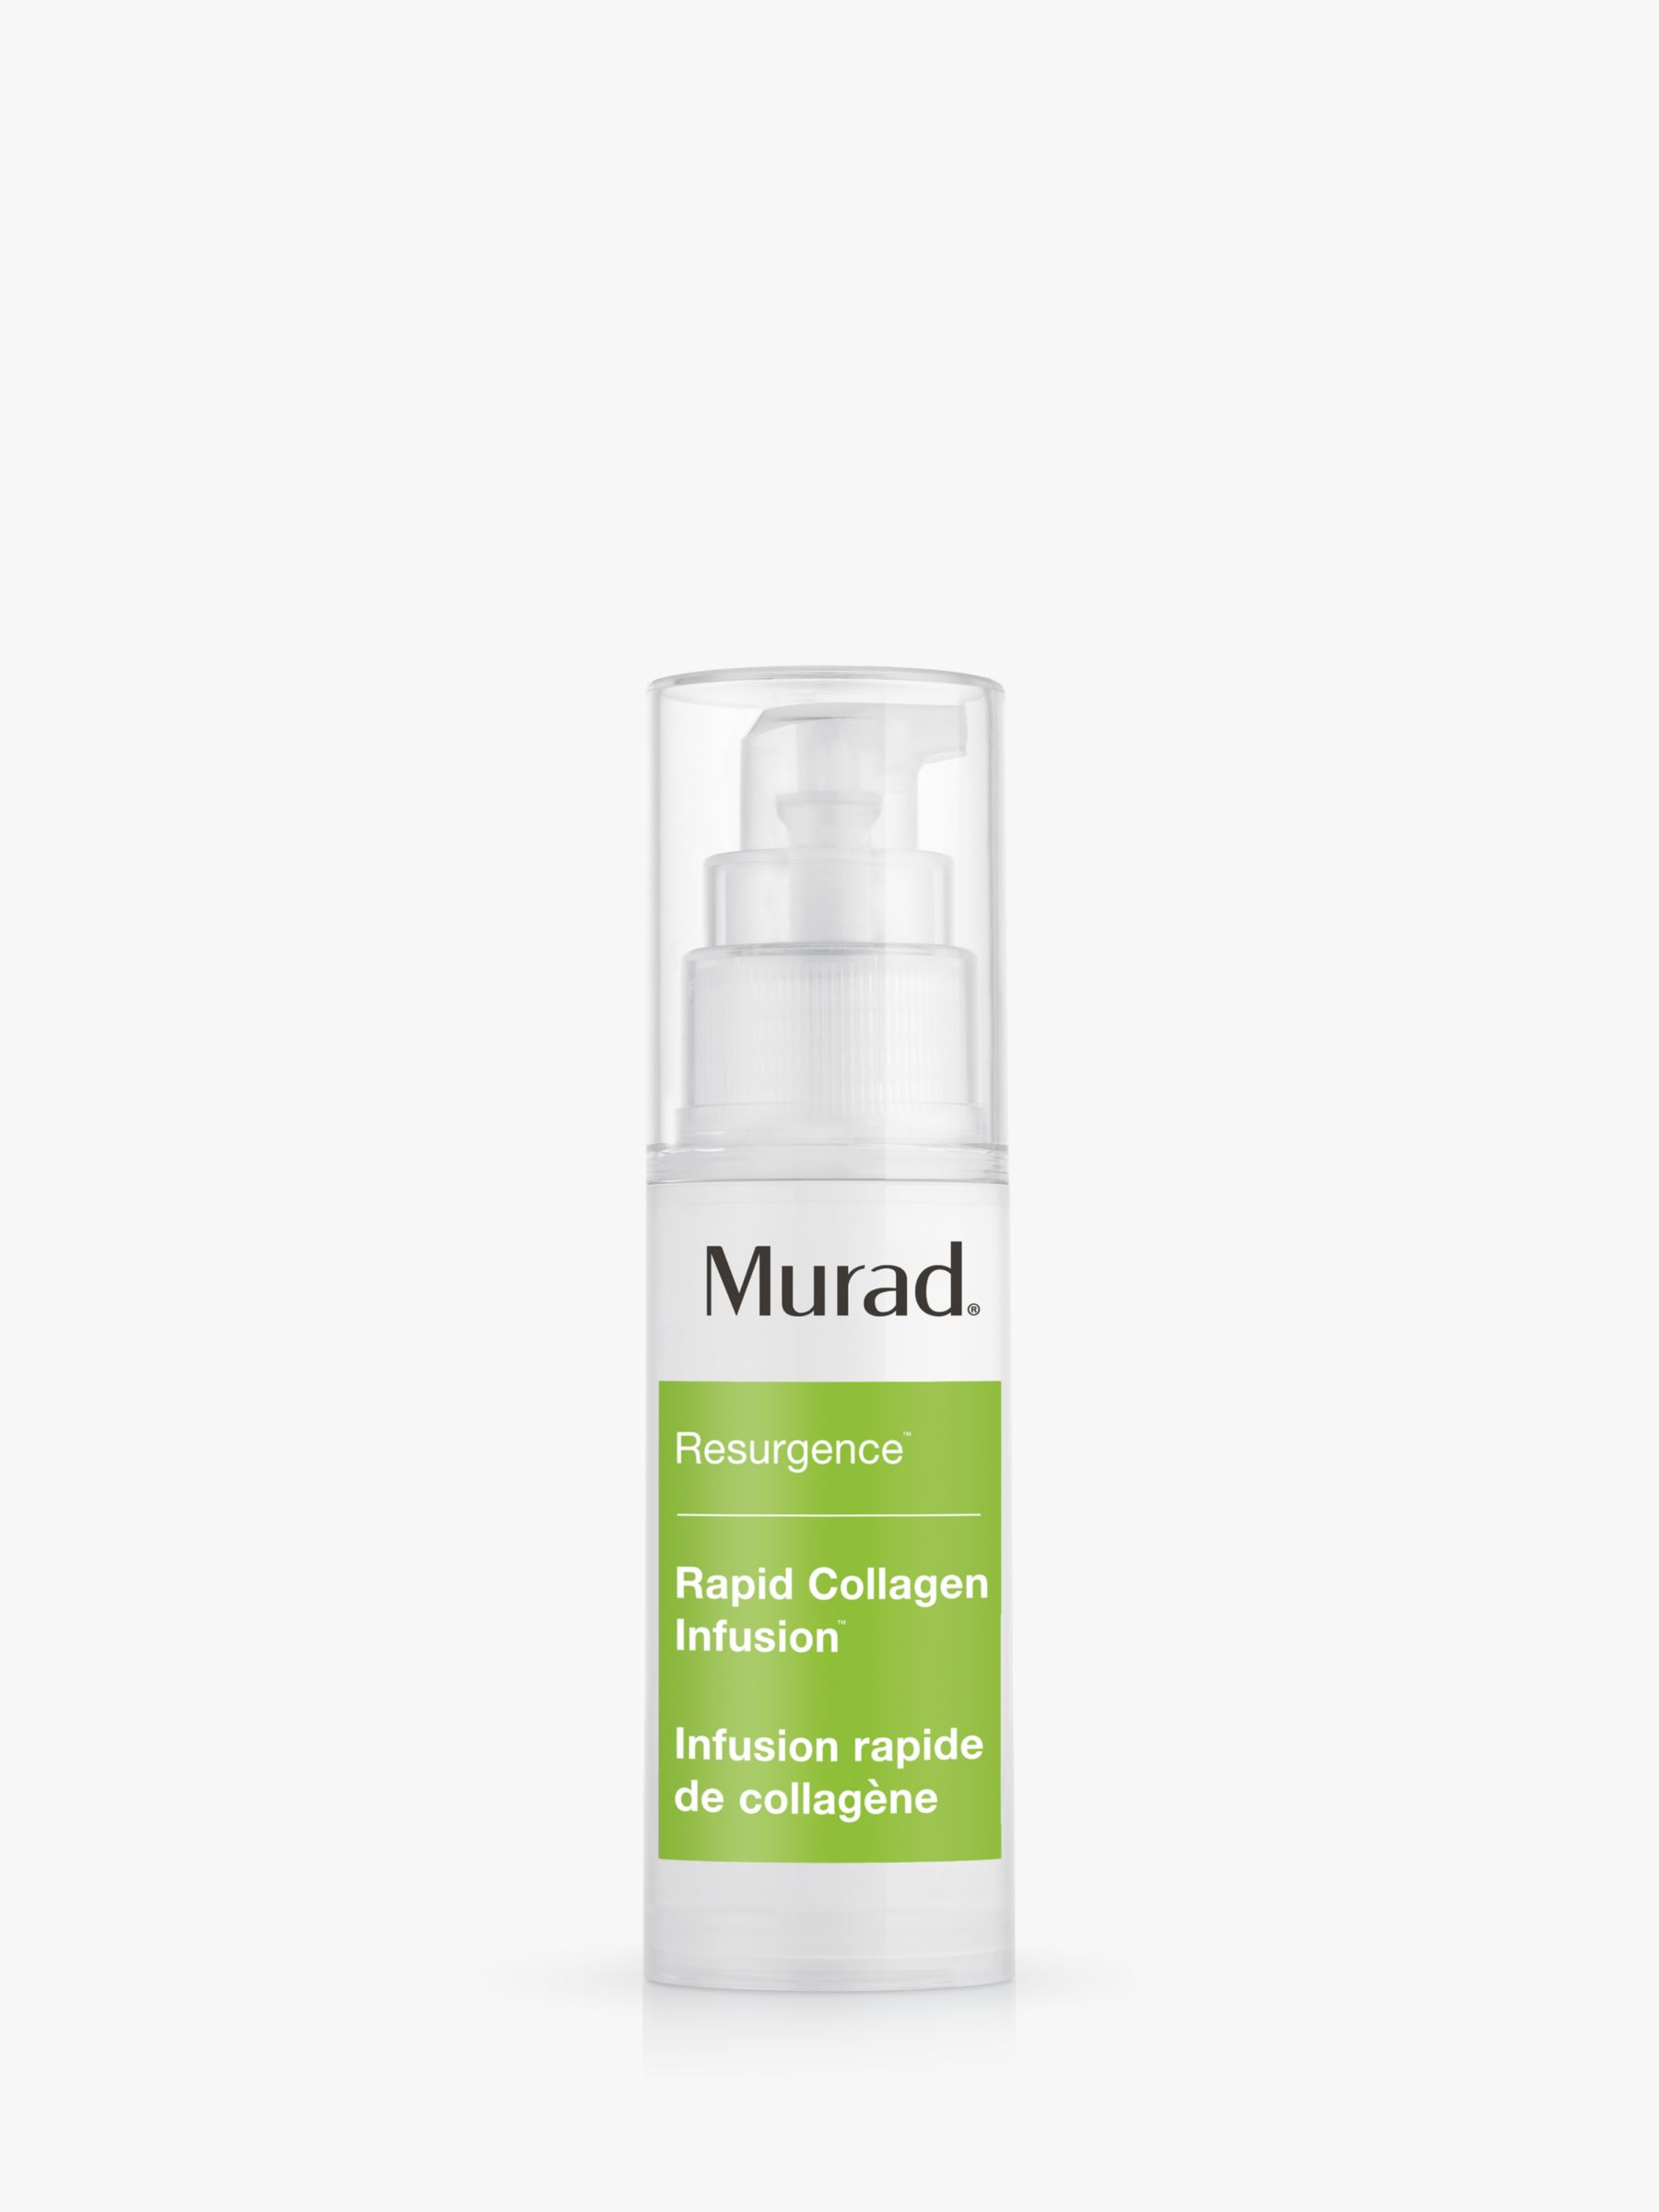 Murad Resurgence Rapid Collagen Infusion, 30ml 1